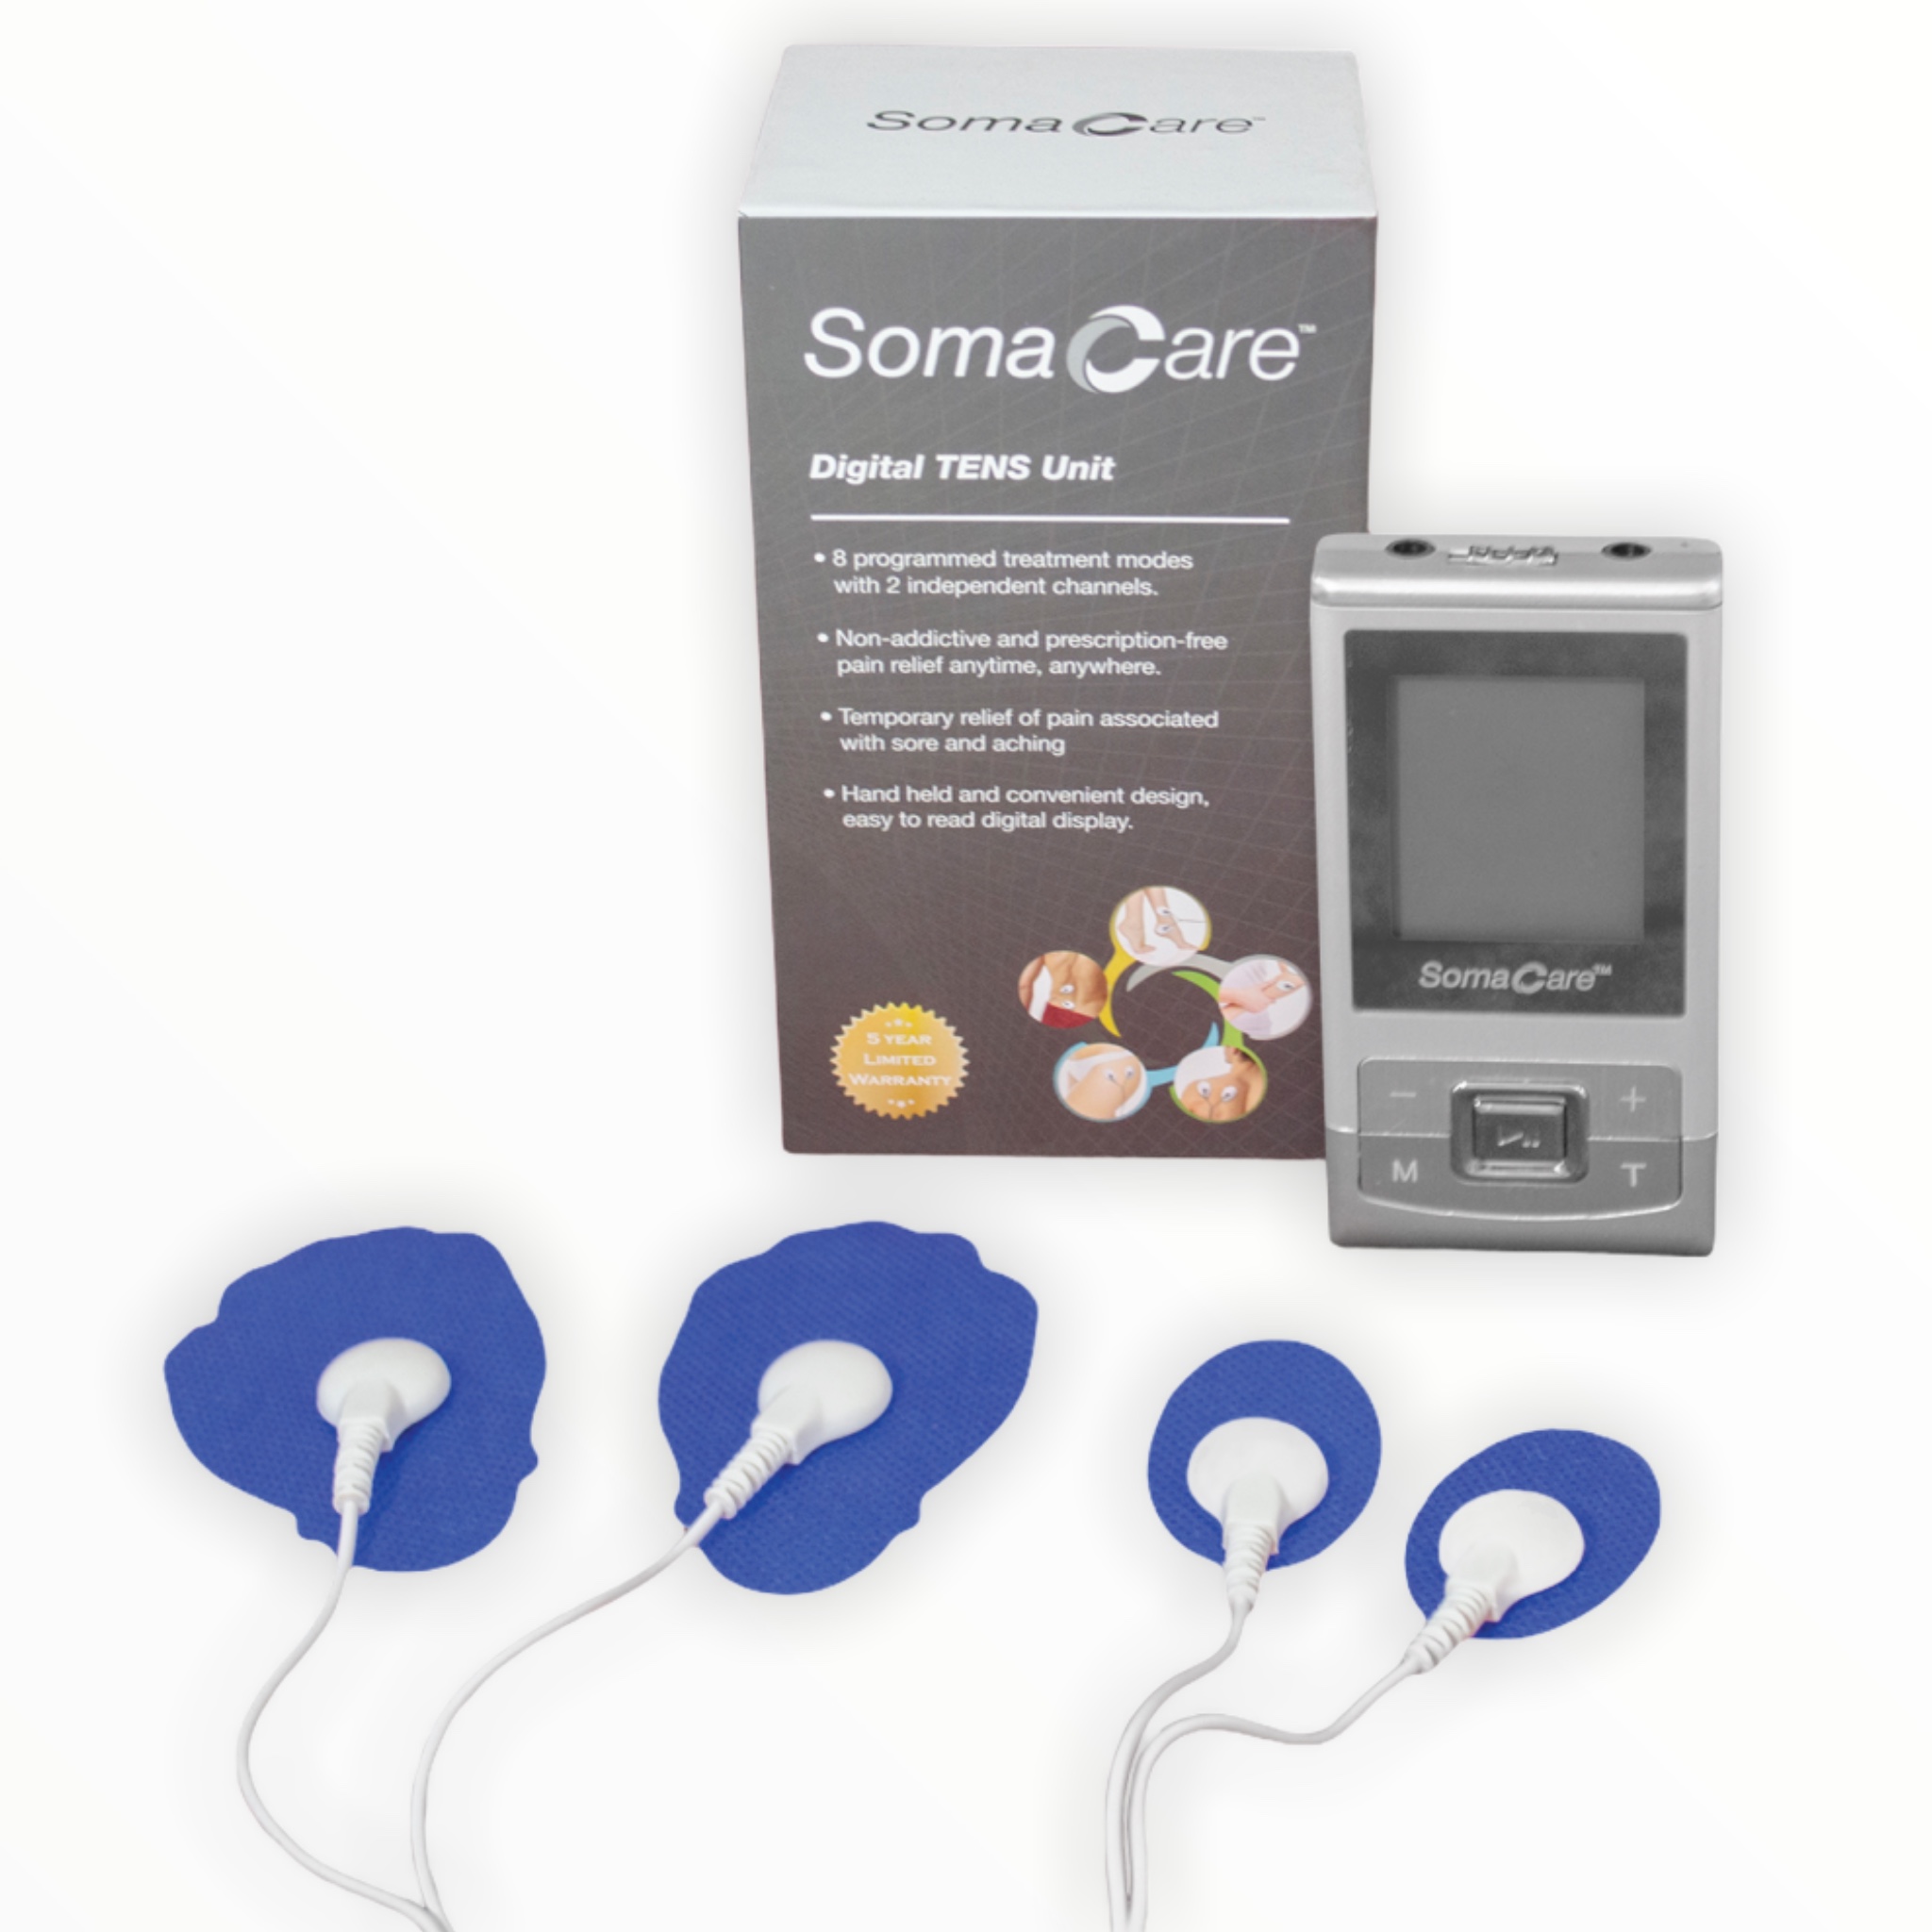 Soma Care Digital Tens Unit $5...